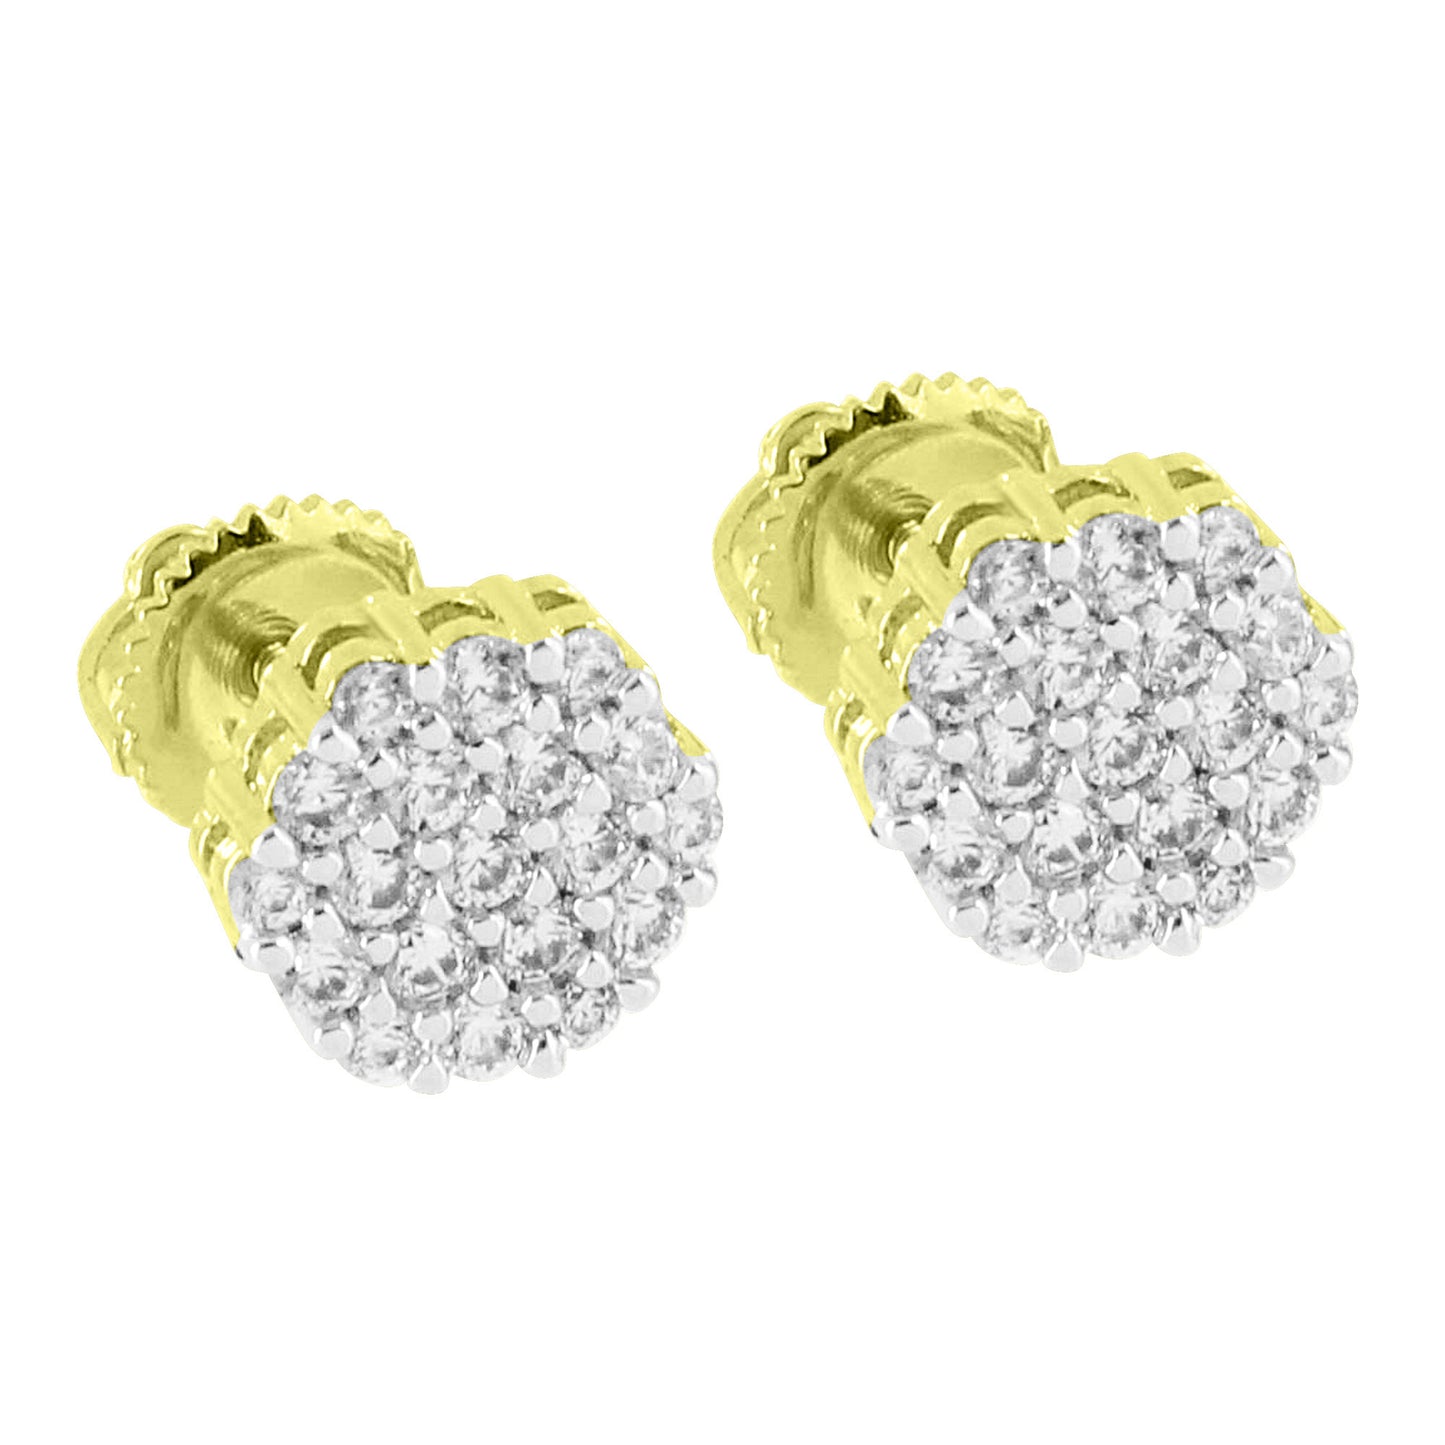 Cluster Set Round Earrings Flower Design Gold Tone Lab Diamonds Screw Back 8mm